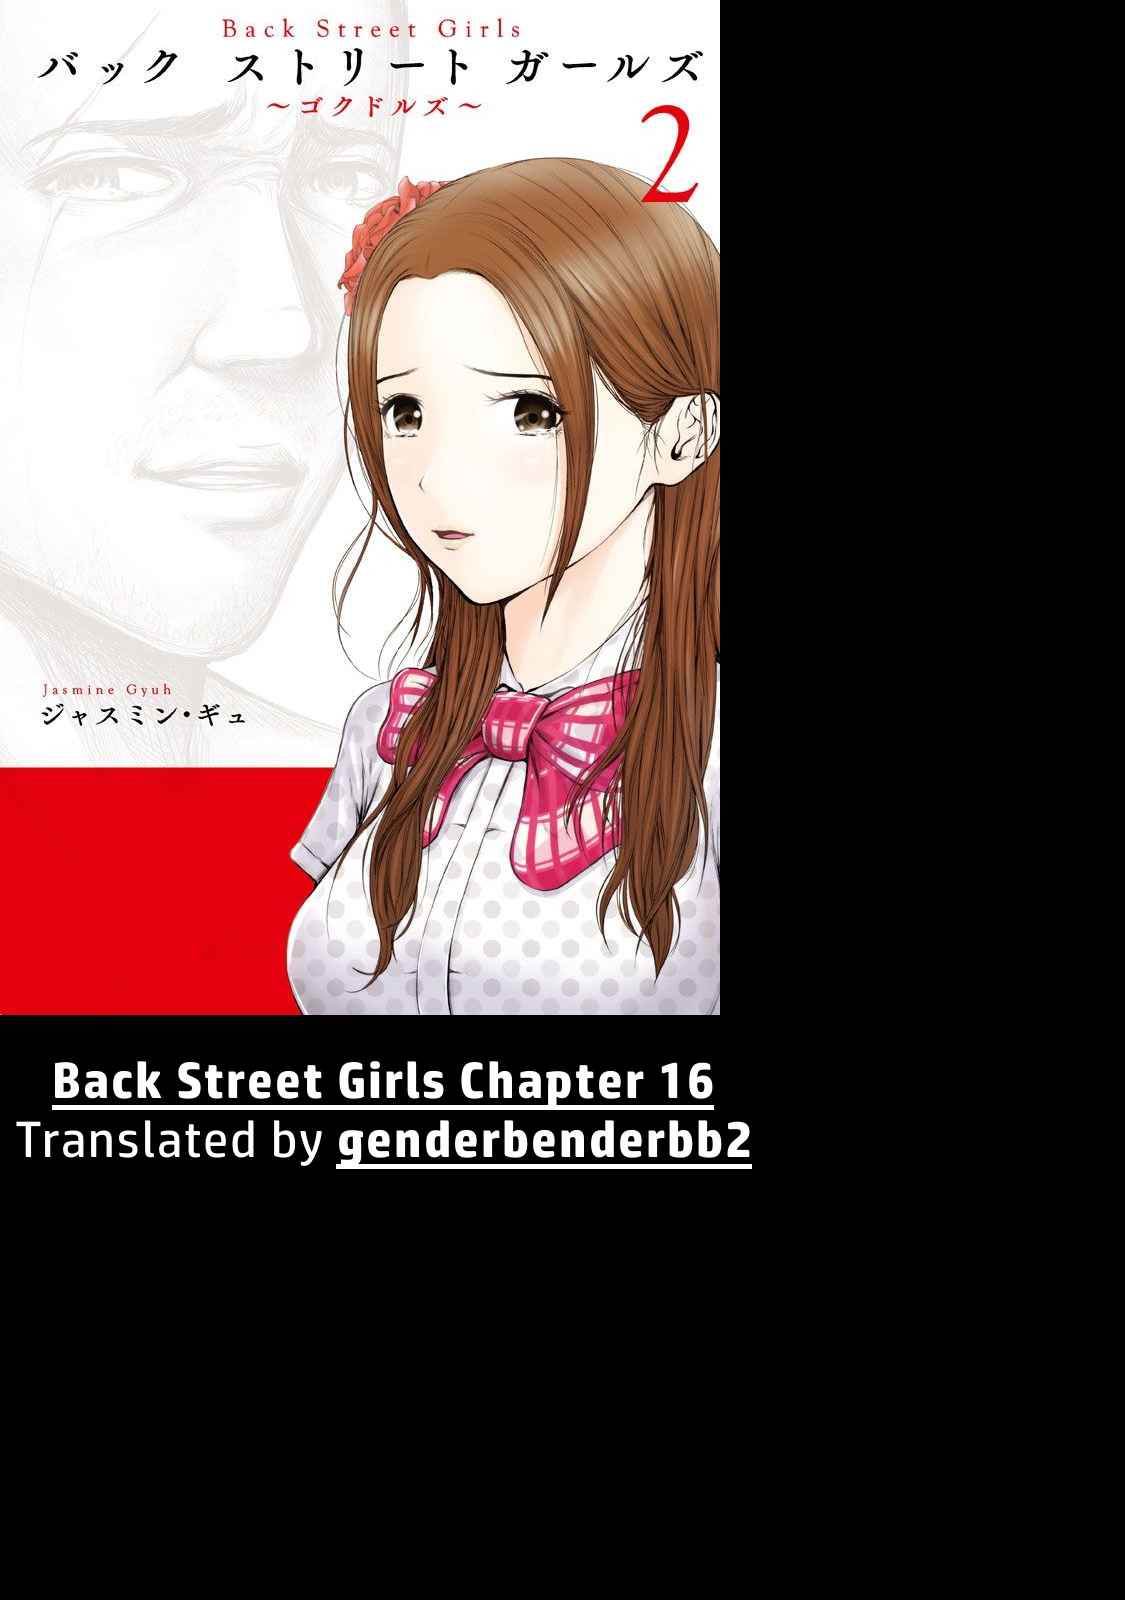 Back Street Girls Vol. 2 Ch. 16 Star of the Silver Screen